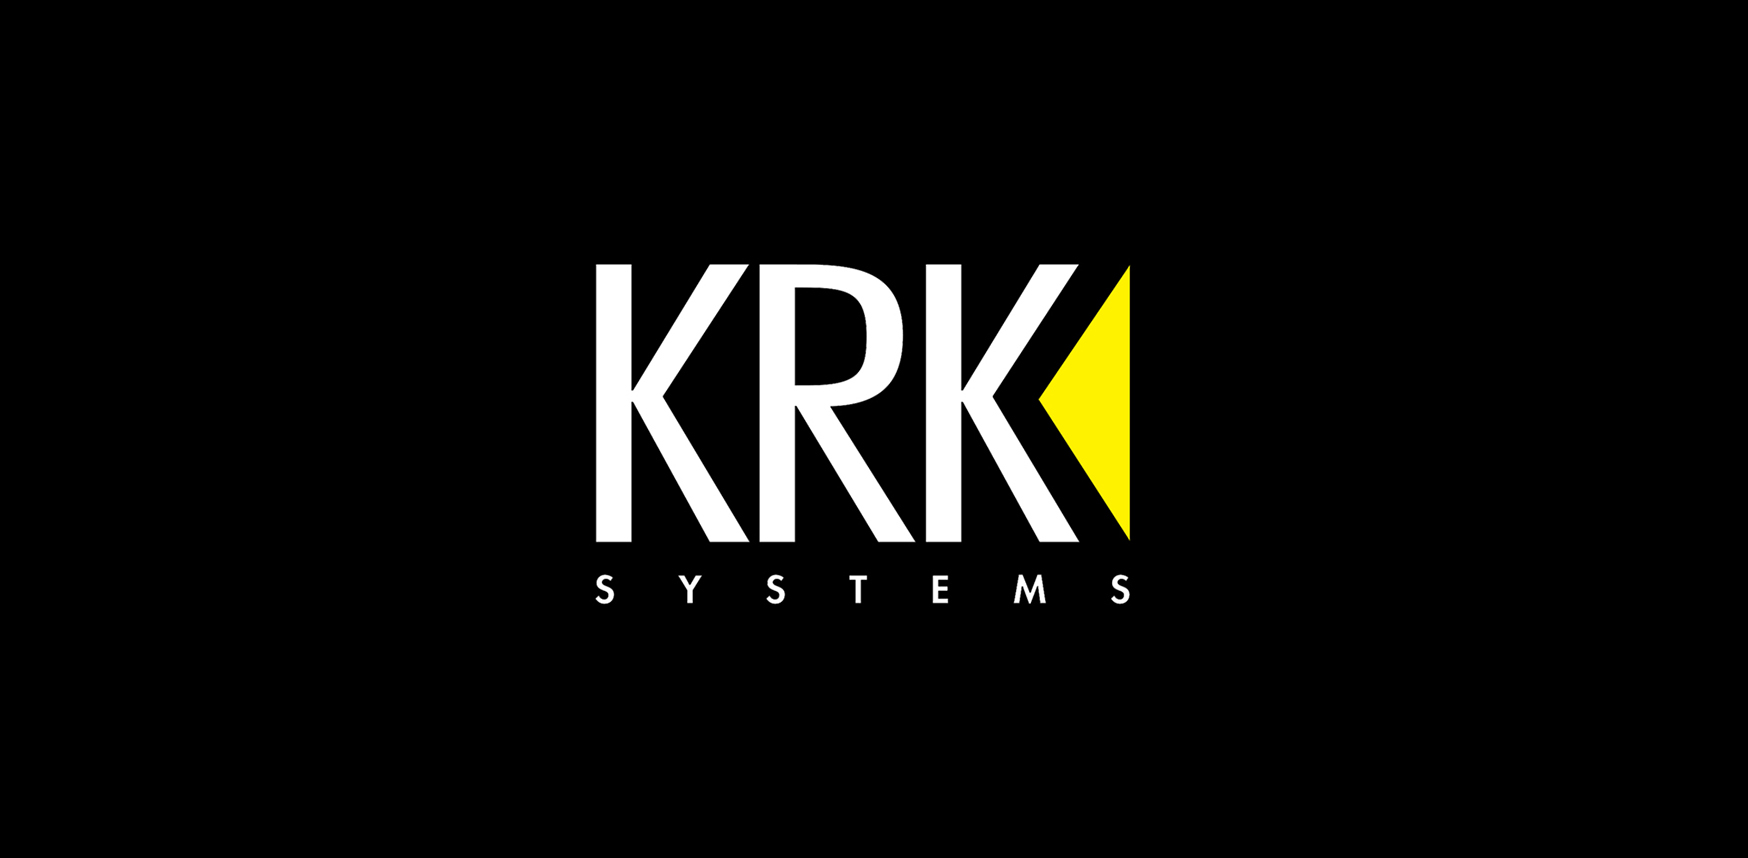 KRK Systems Logo photo - 1